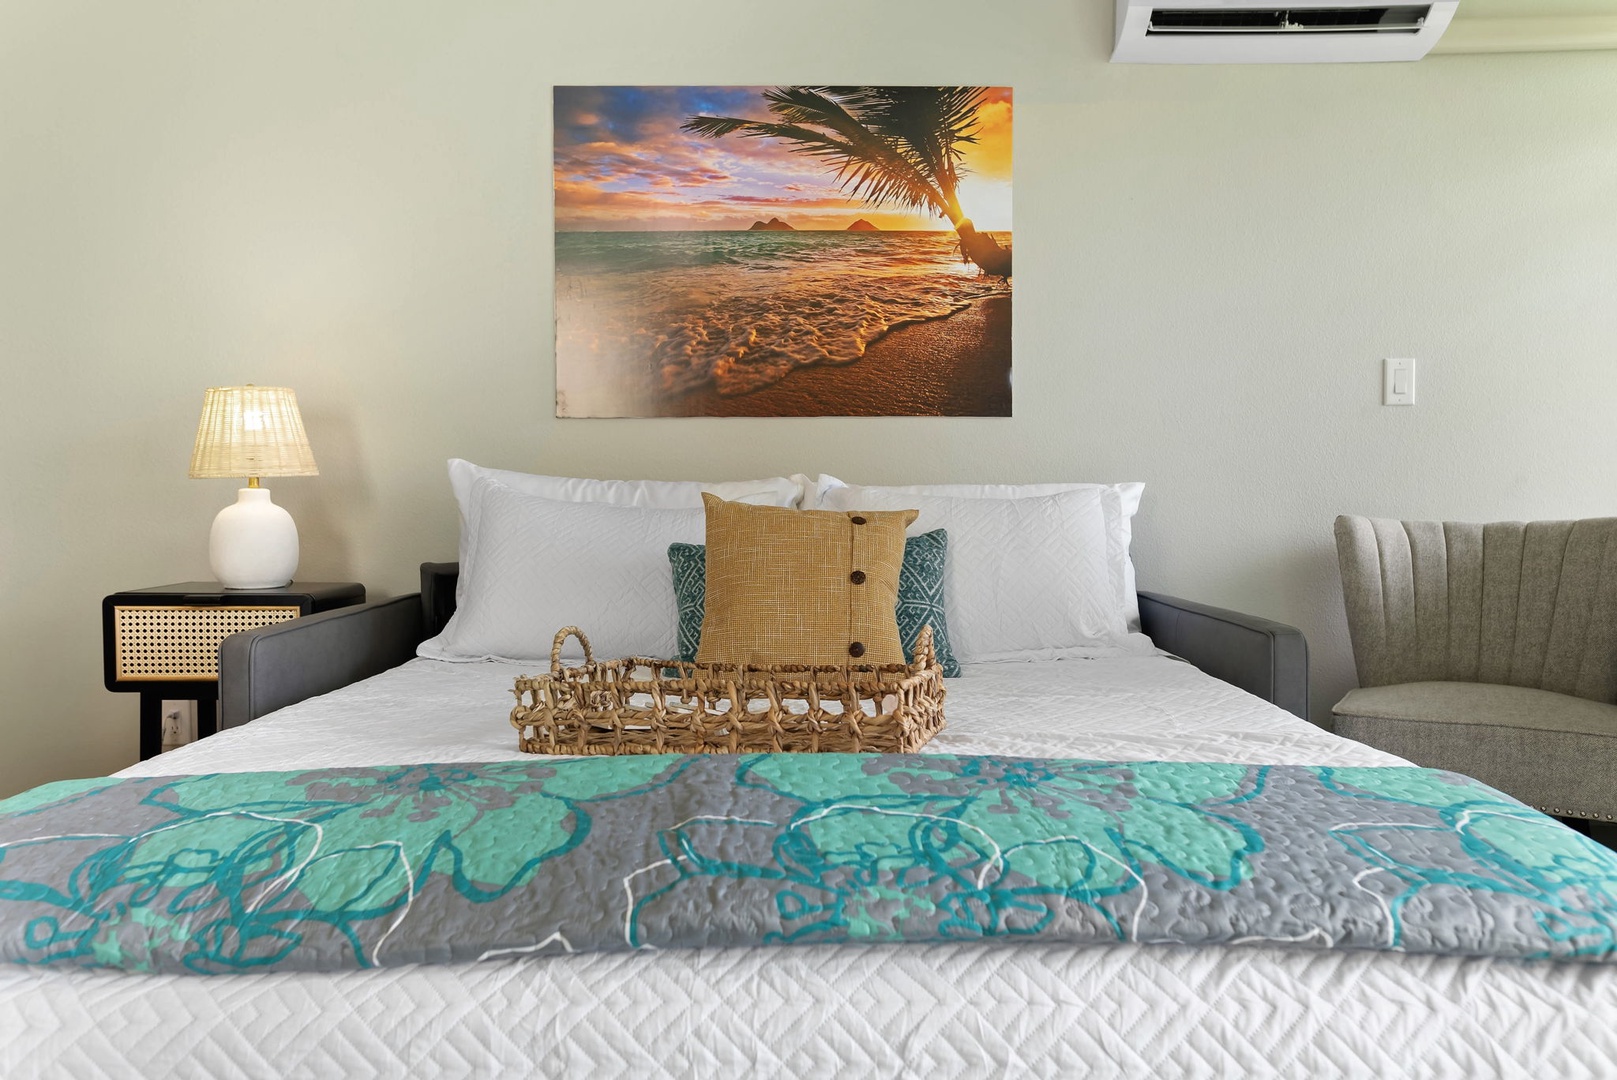 Kahuku Vacation Rentals, Turtle Bay's Kuilima Estates West #104 - This queen sleeper sofa sleeps 2